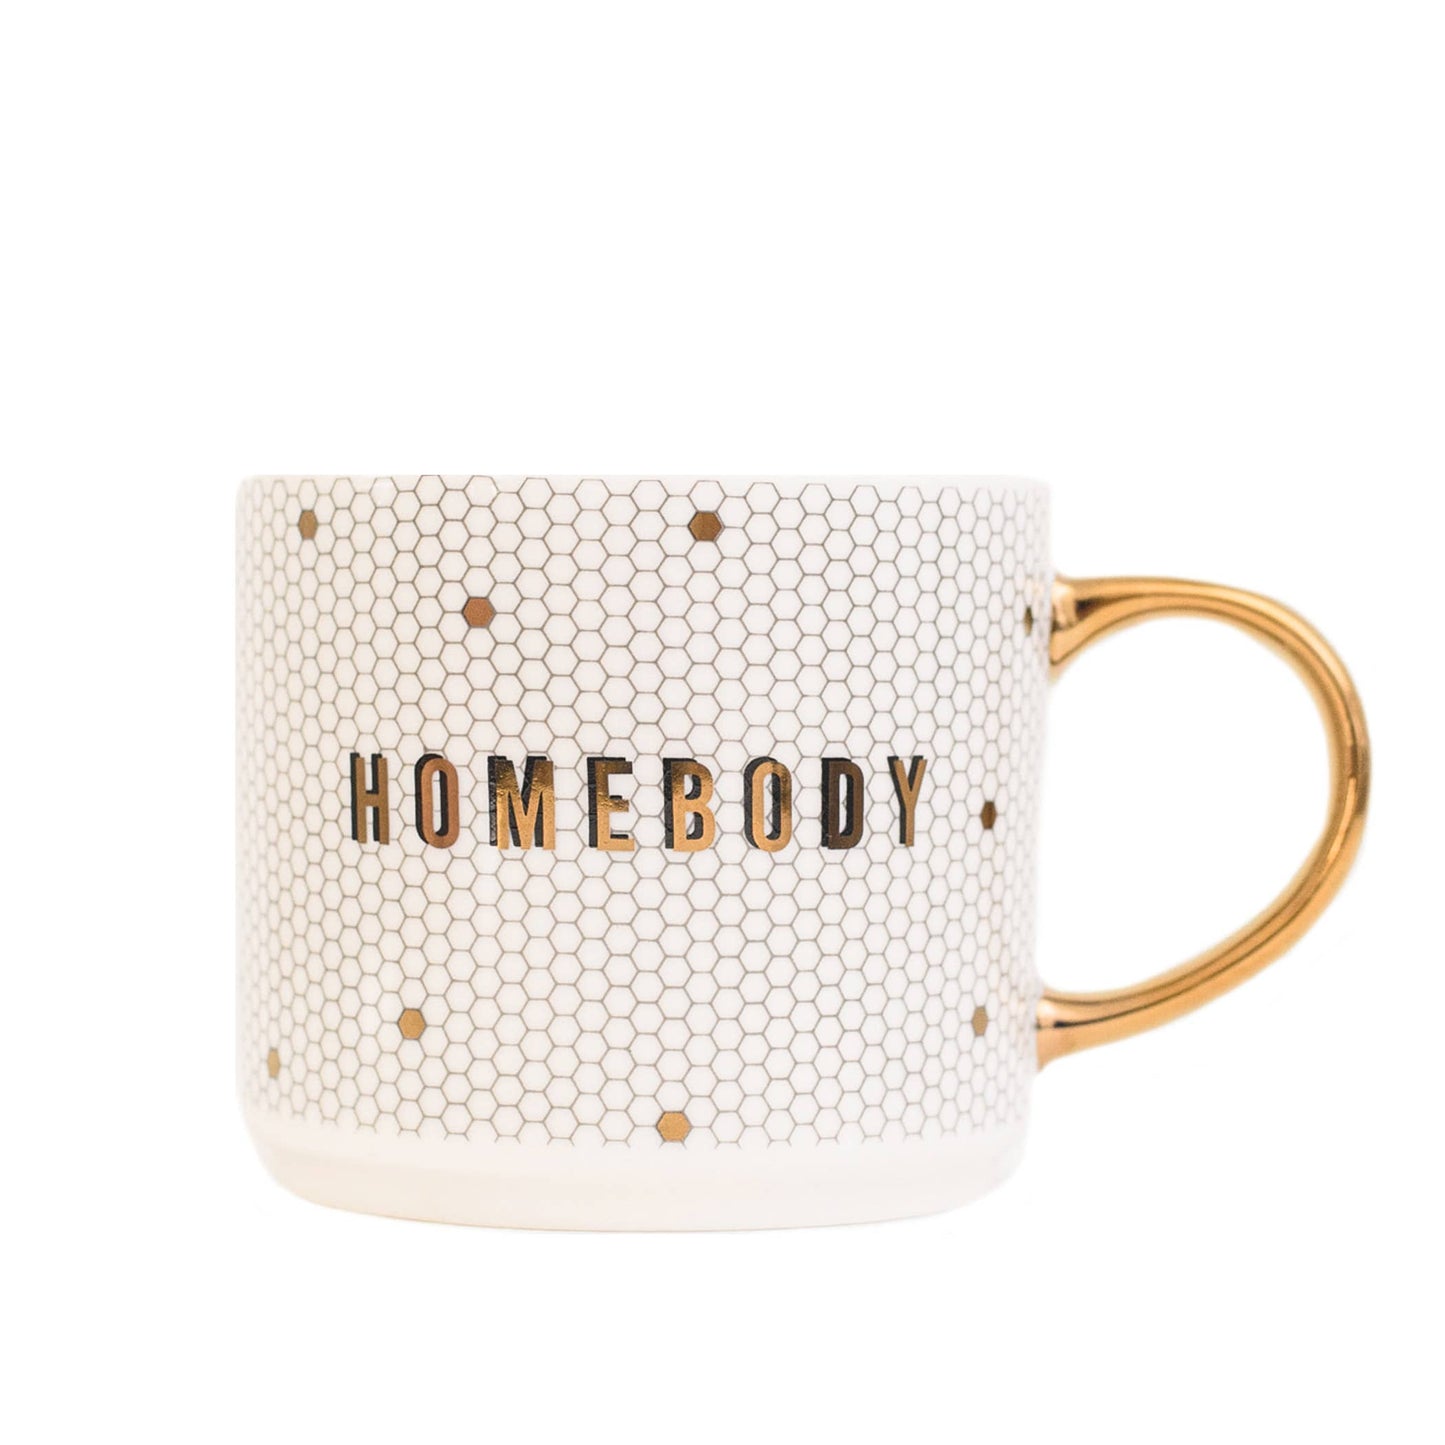 Sweet Water Decor - Homebody - Gold, White Honeycomb Tile Coffee Mug - 17 oz